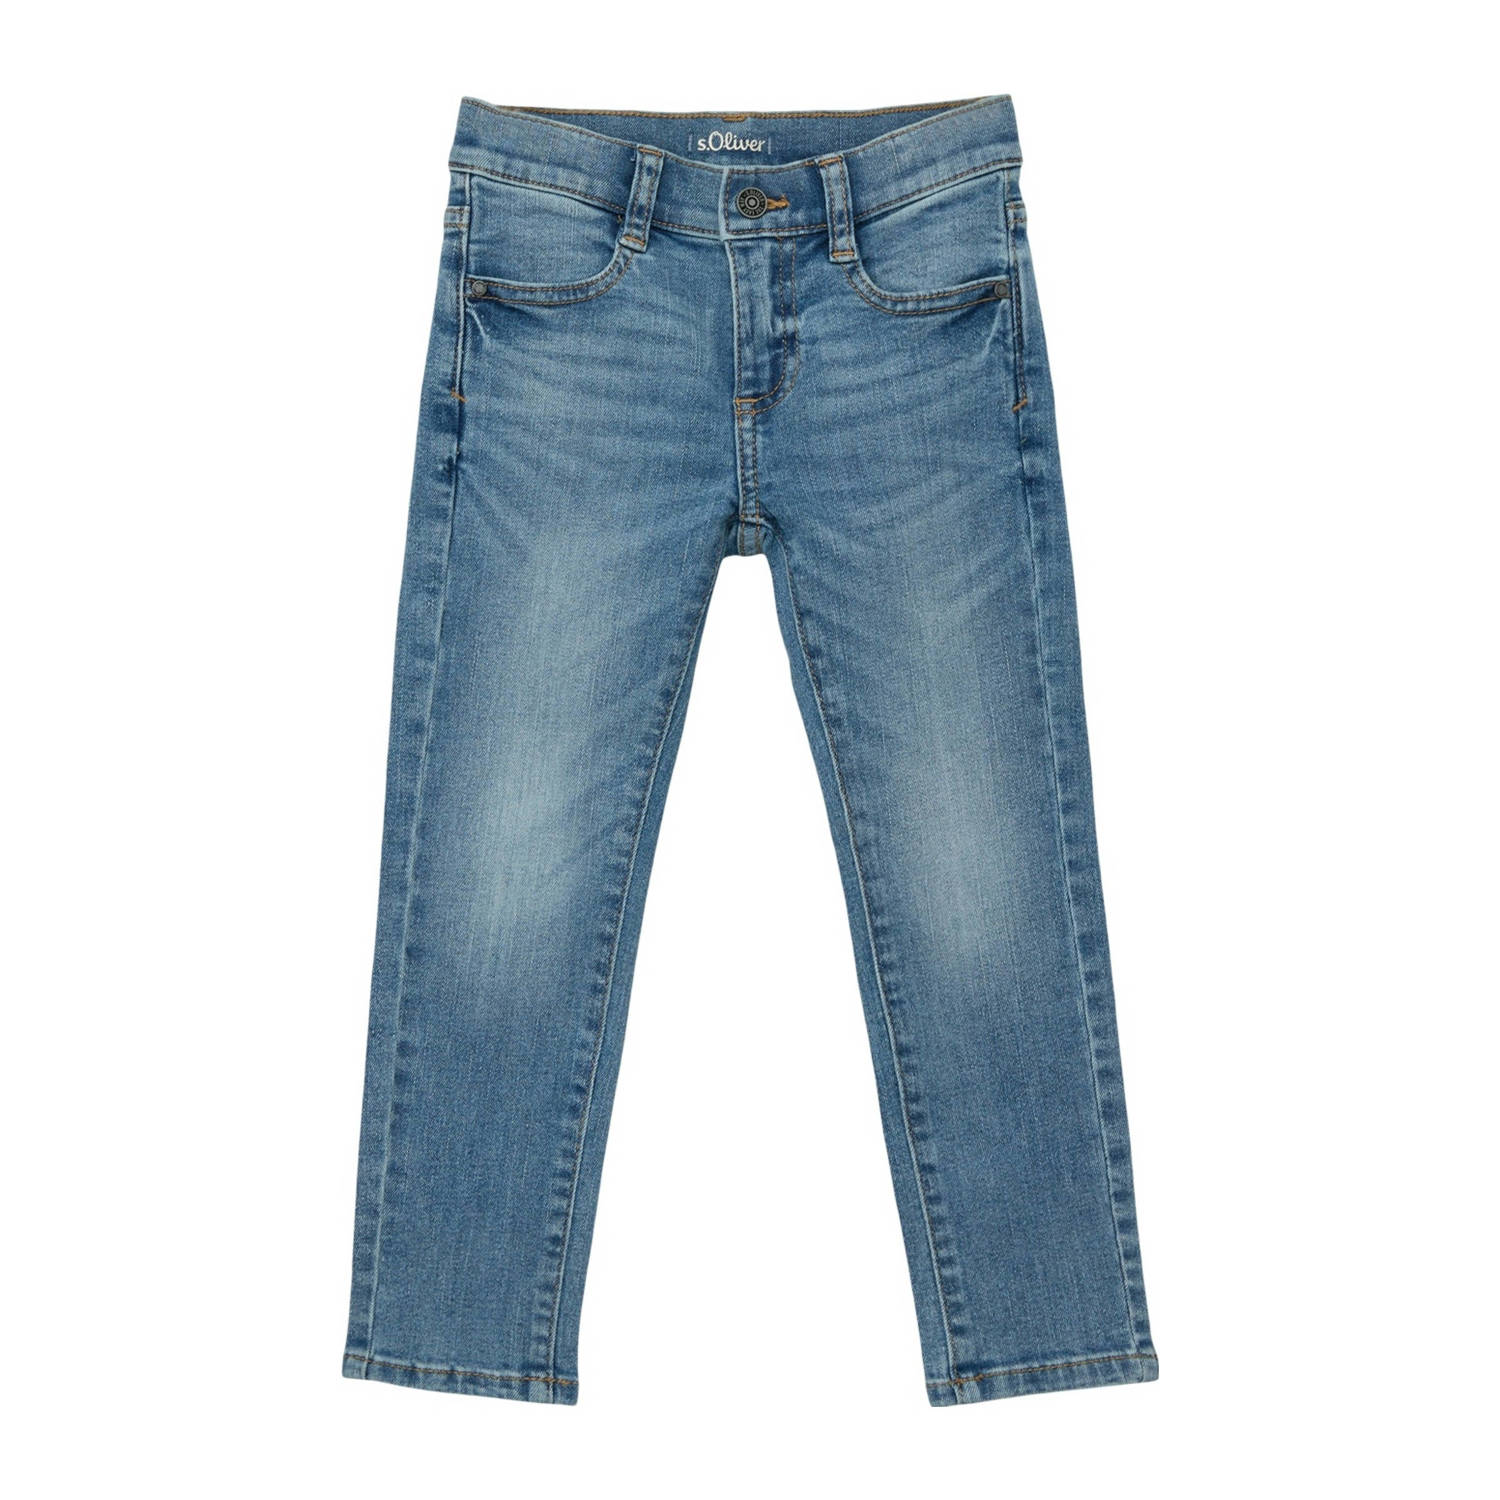 s.Oliver slim fit jeans blauw